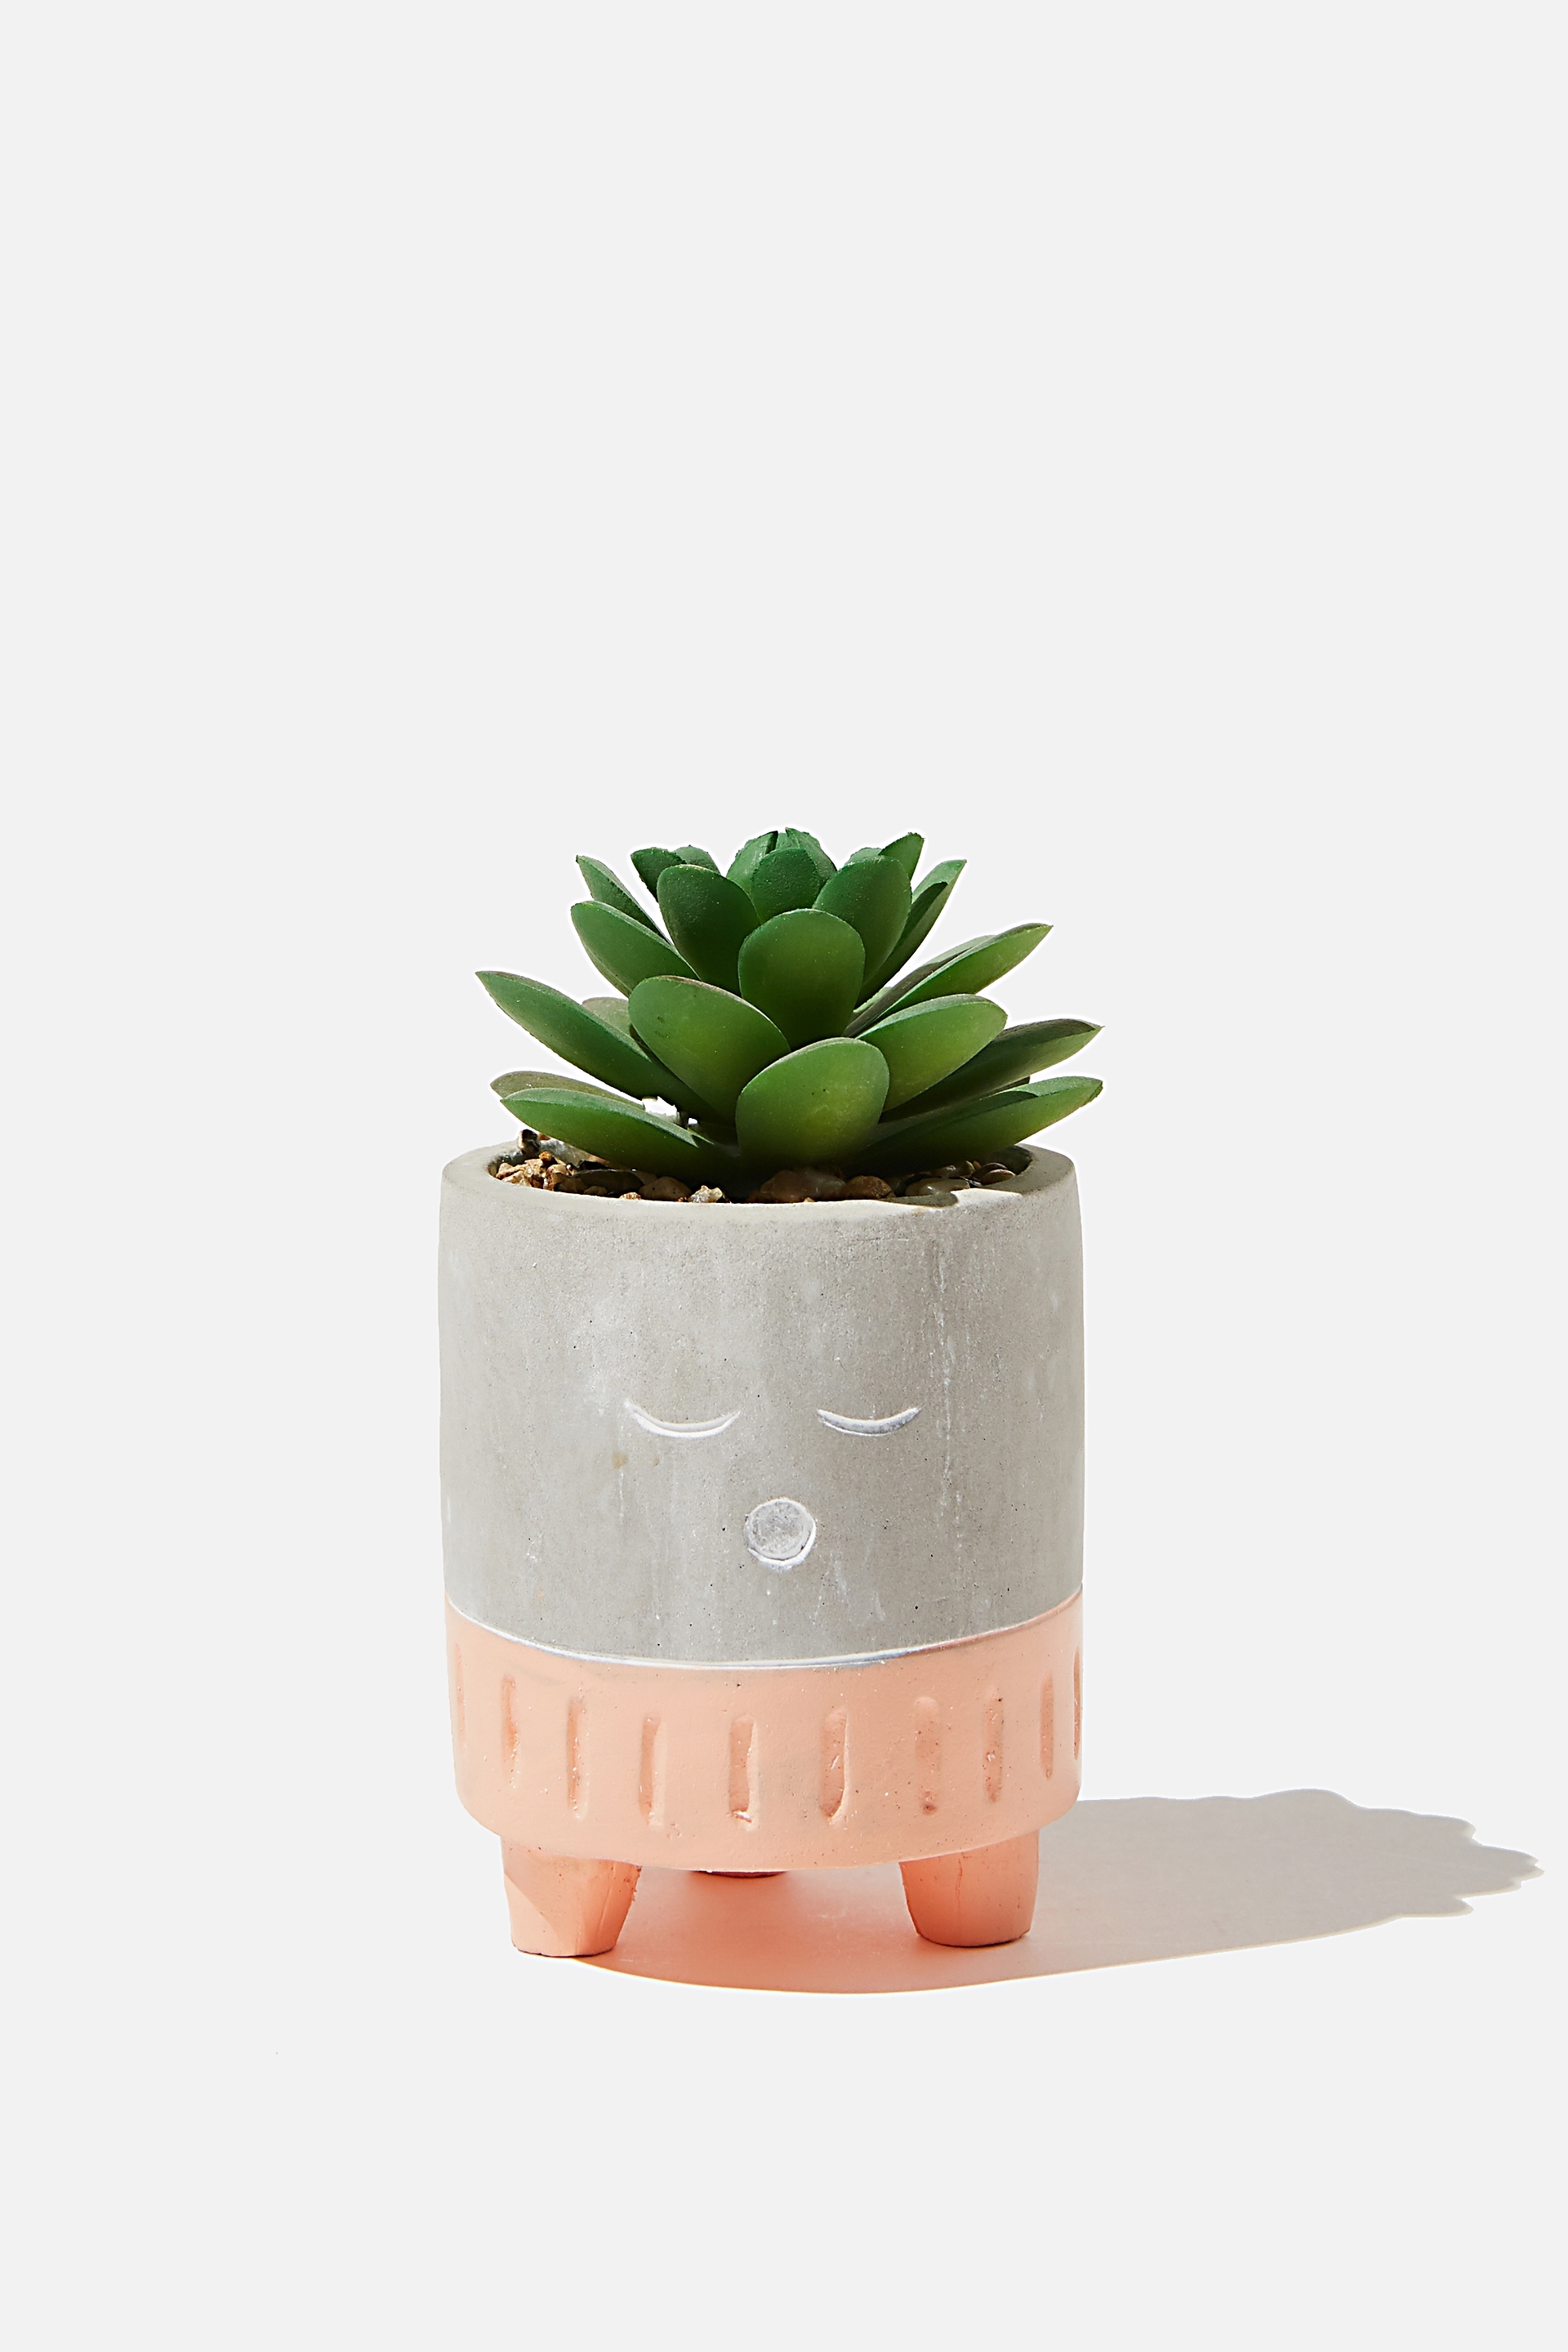 Typo - Tiny Planter With Plant - Cement & peach sleepy face